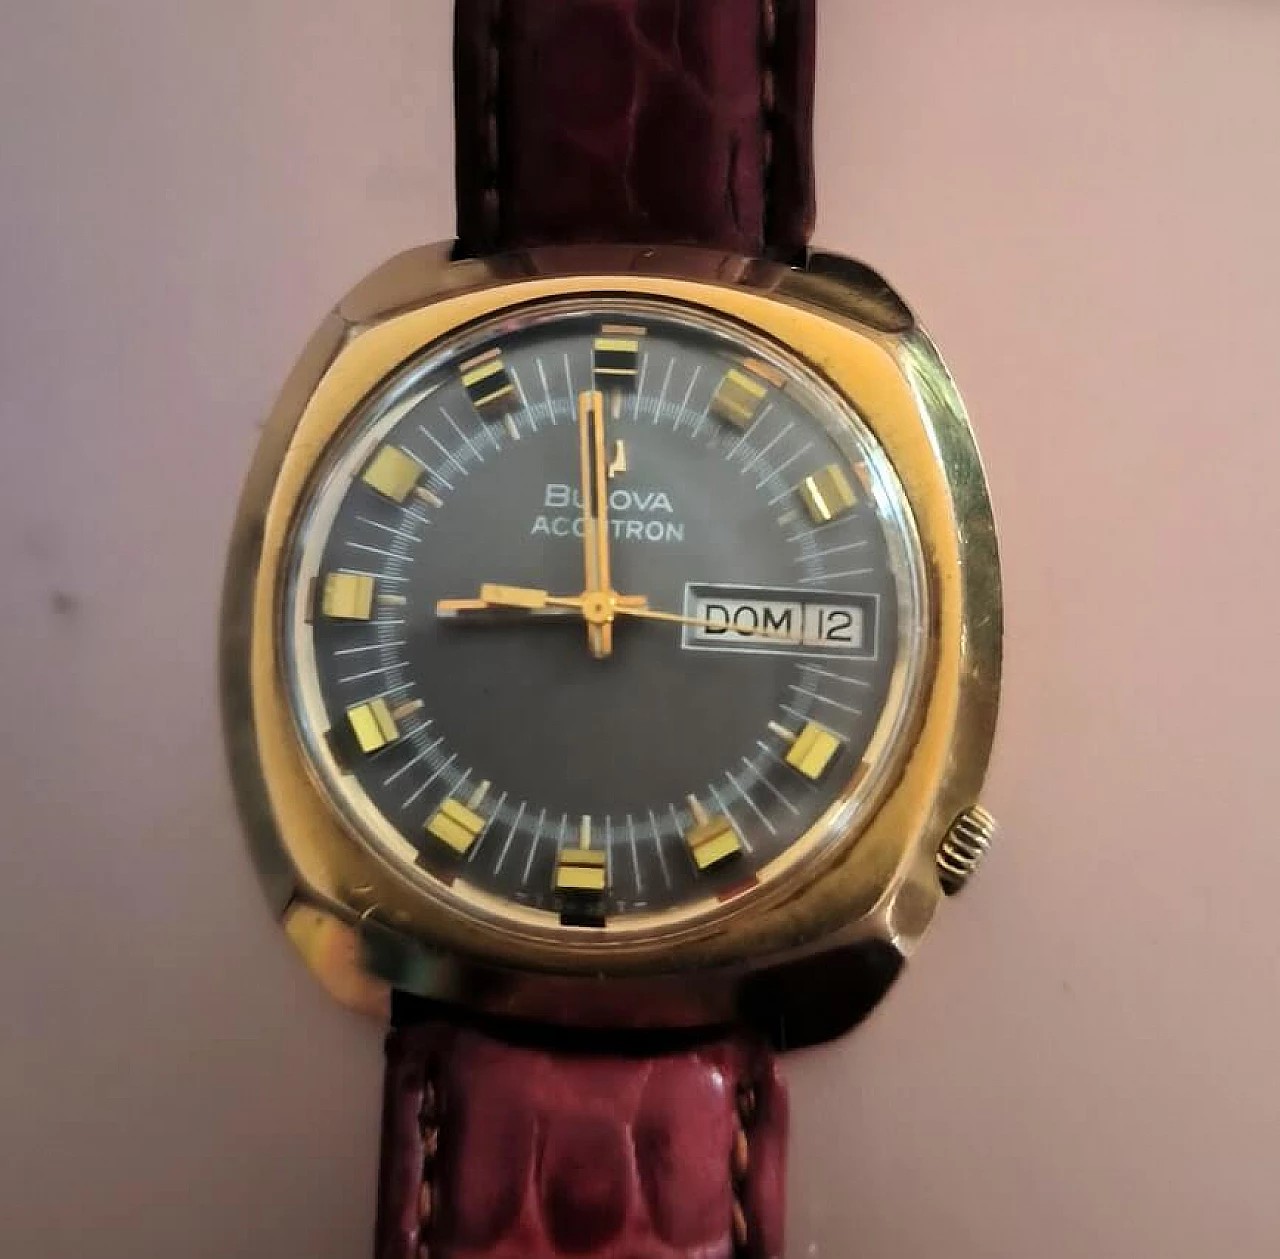 Men's Accutron wristwatch by Bulova, 1970s 1